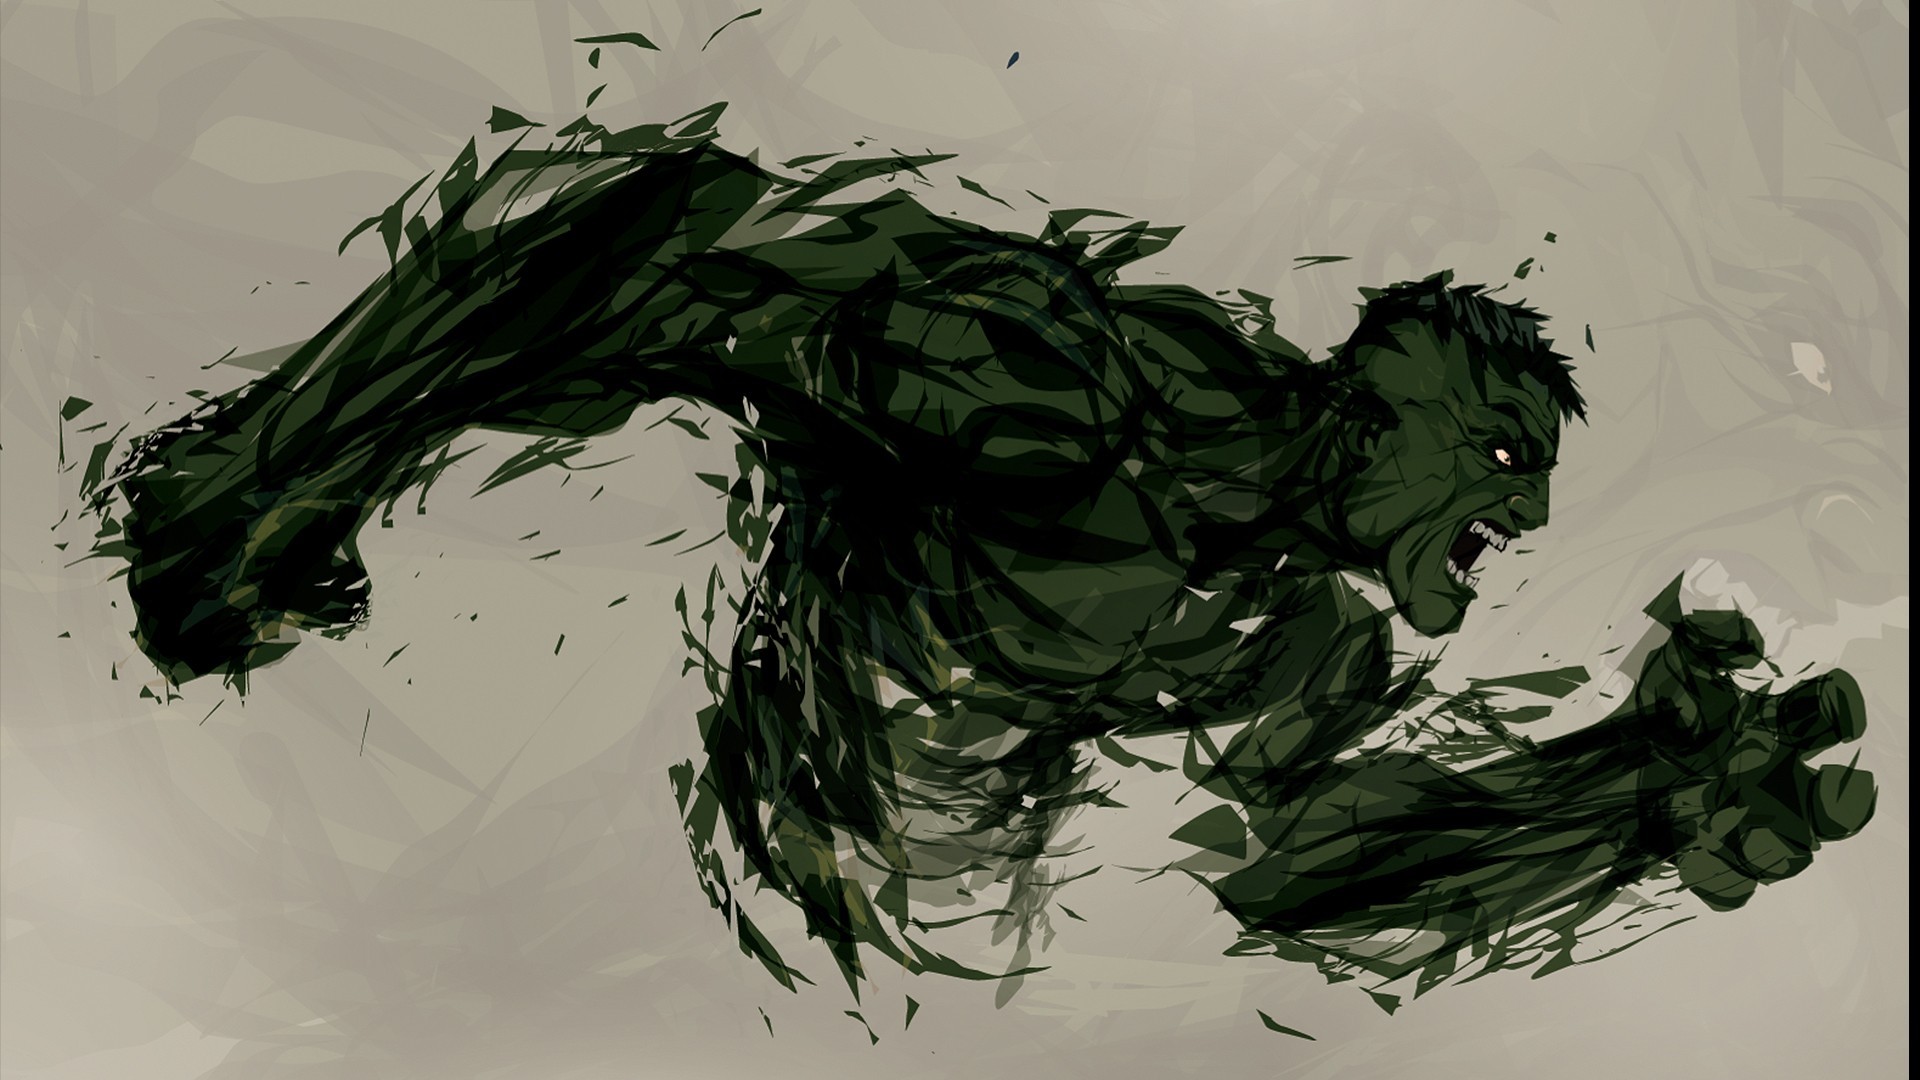 Incredible Hulk Abstract Art Exclusive HD Wallpaper